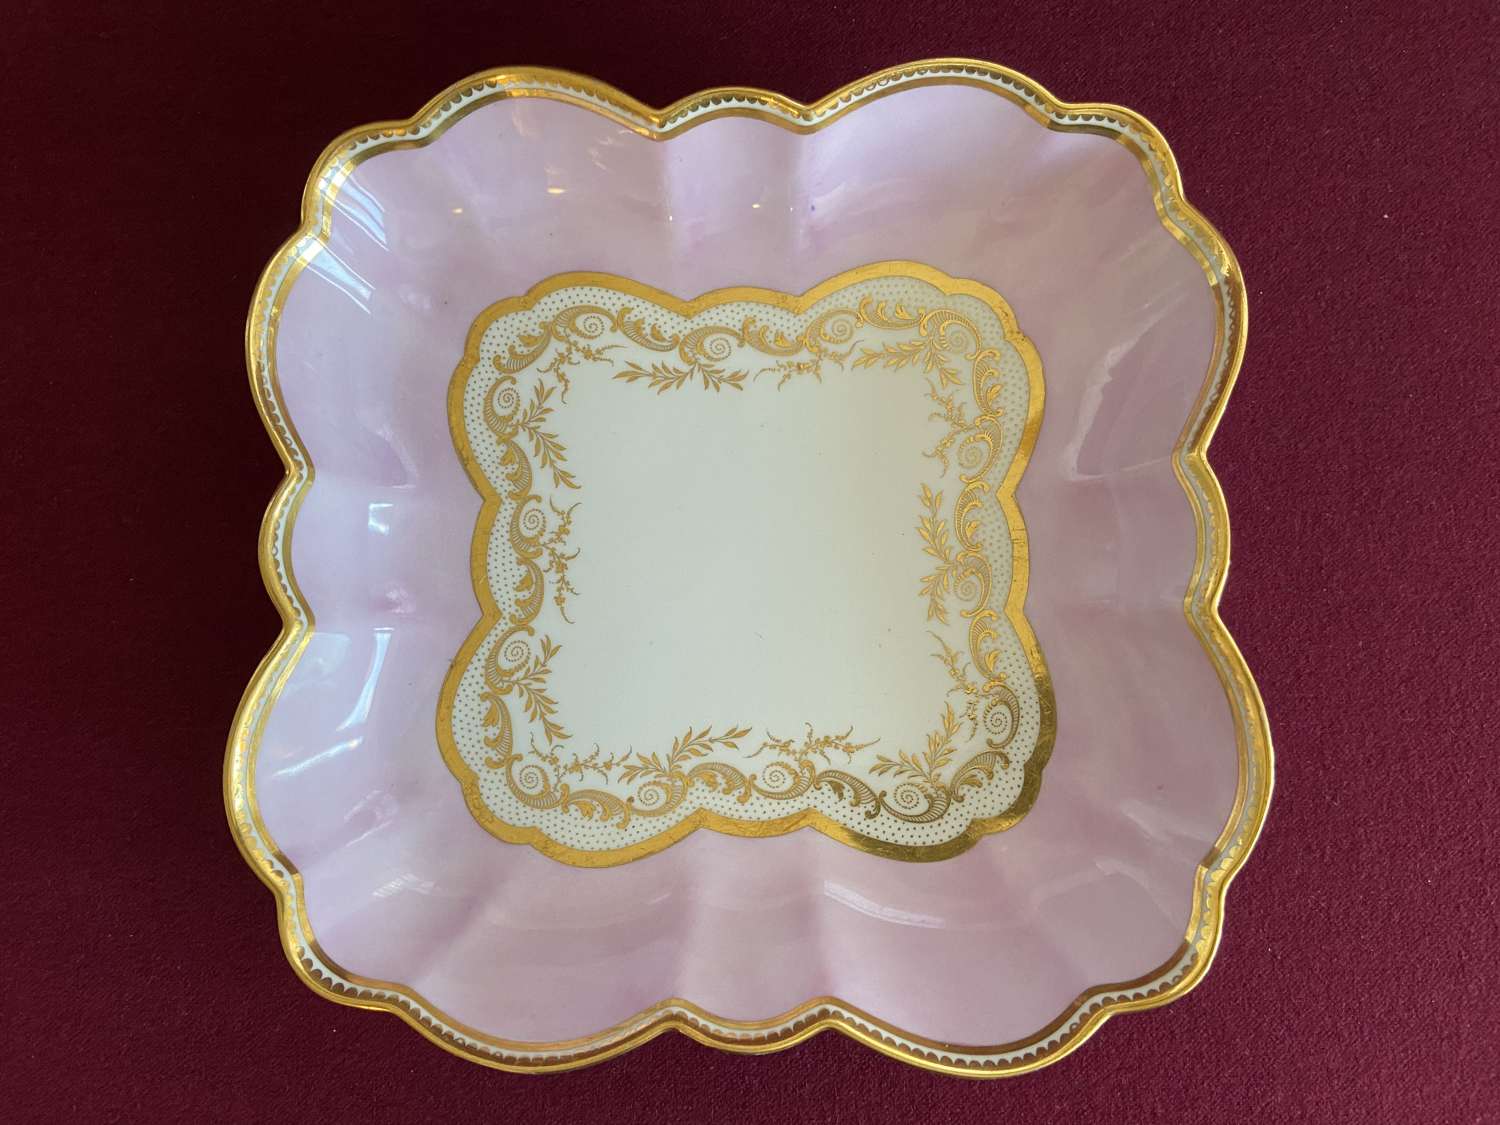 A Barr Flight & Barr Worcester Porcelain Dessert Dish c.1810